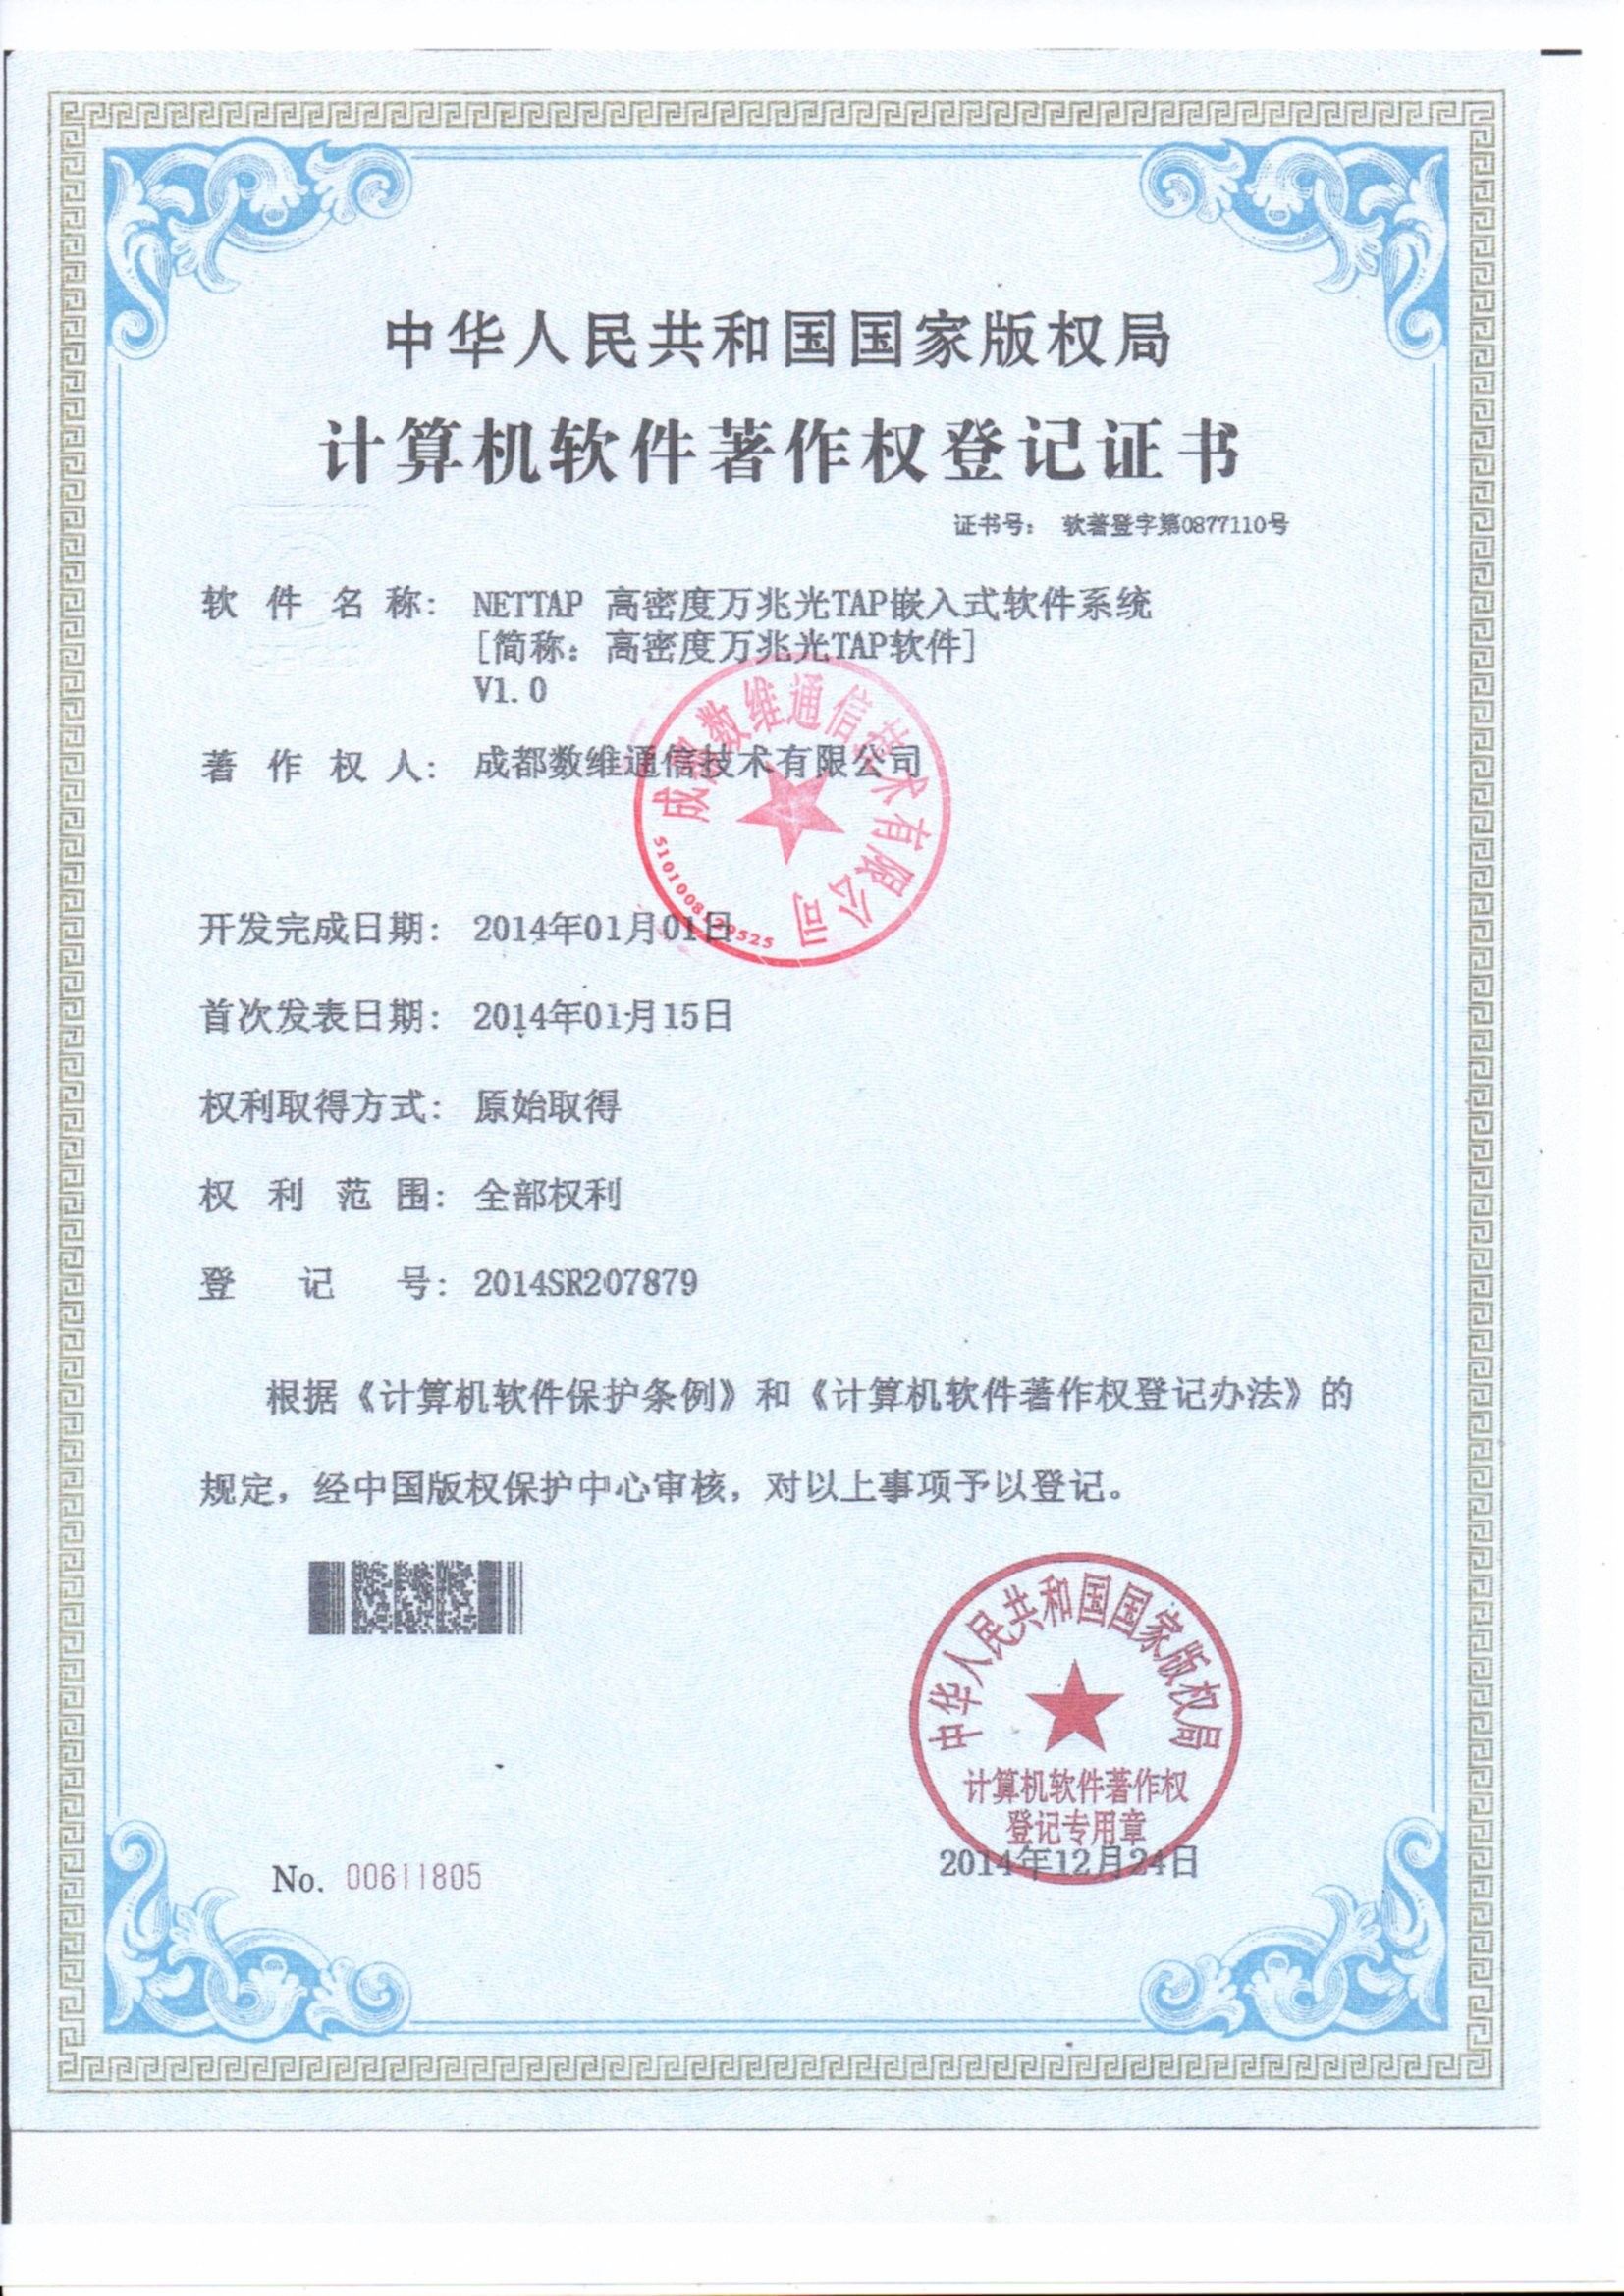 چین Chengdu Shuwei Communication Technology Co., Ltd. گواهینامه ها